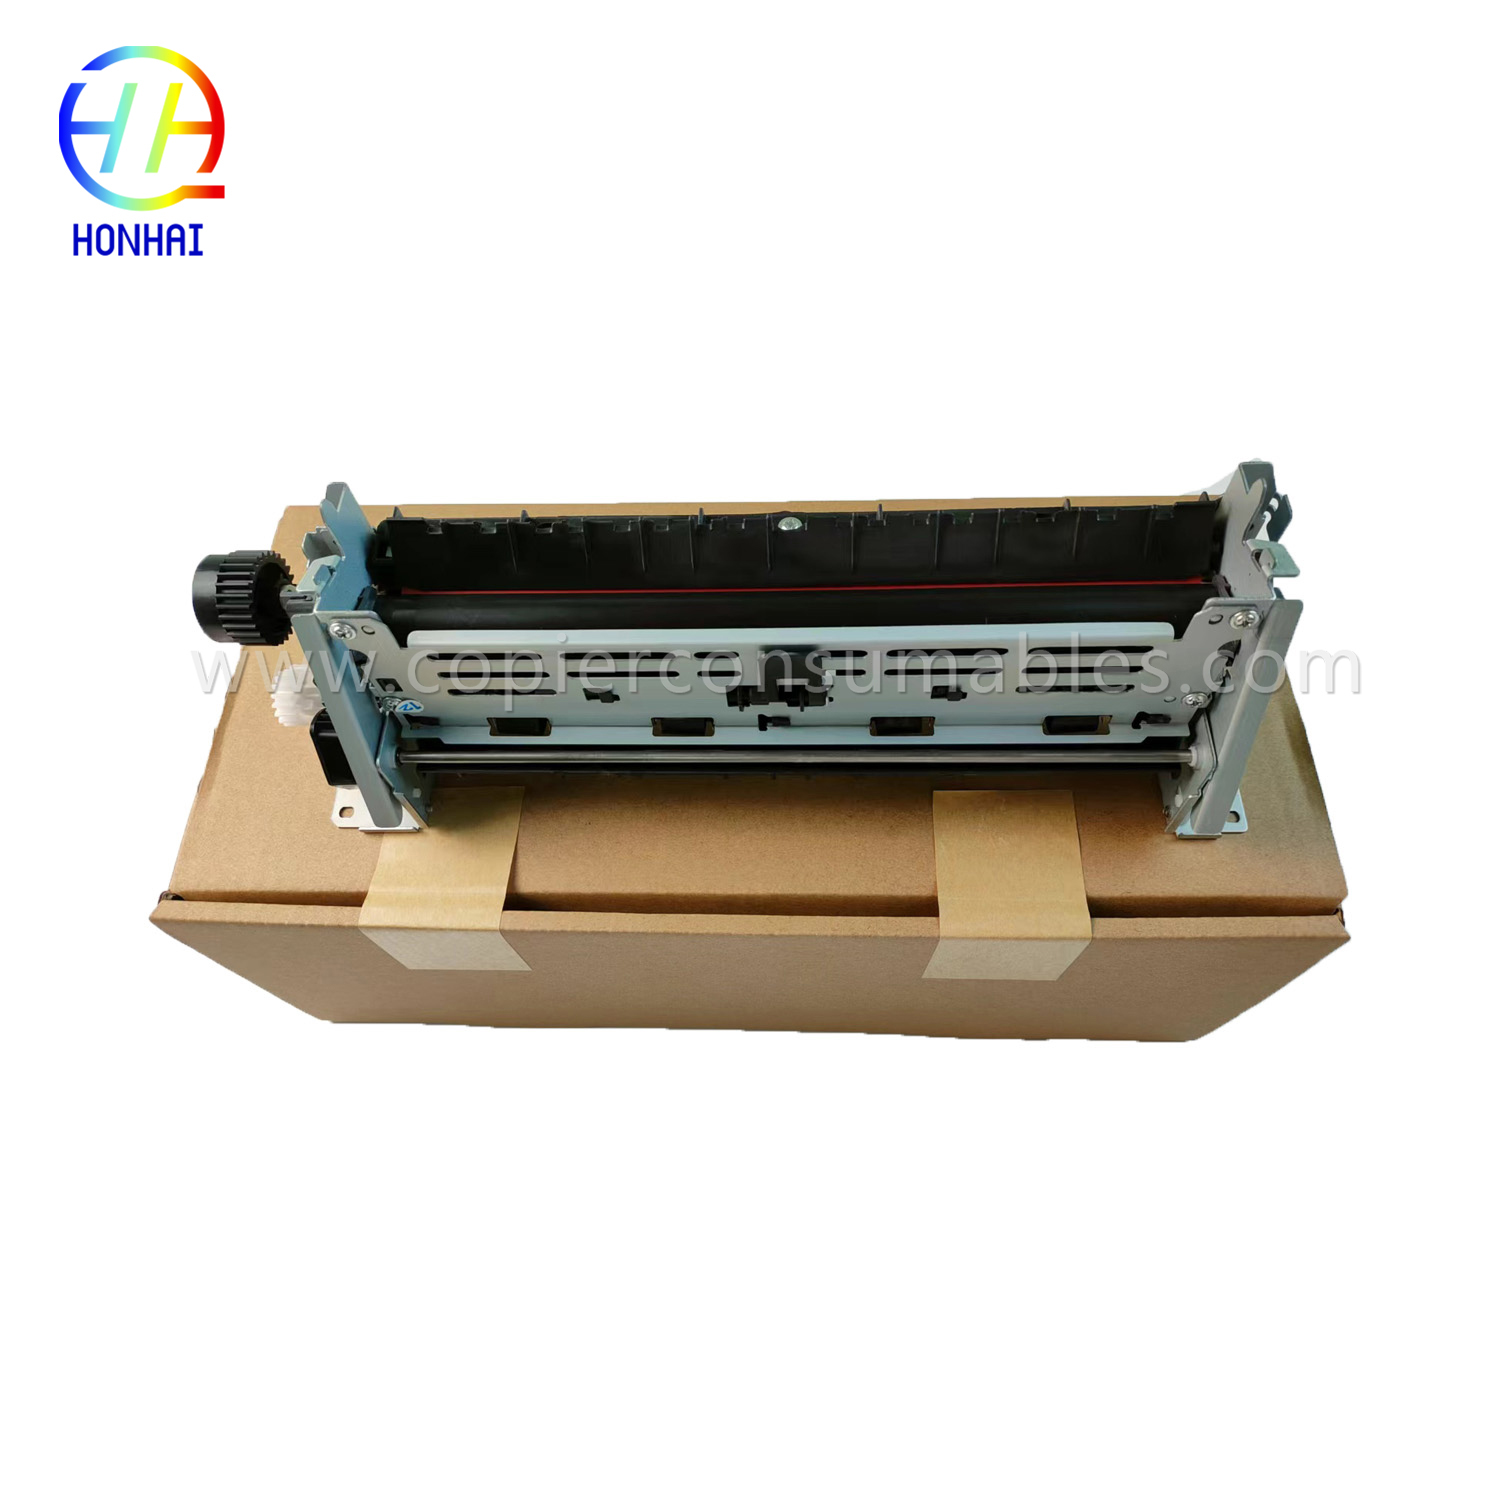 HP LaserJet Printer Pro 400 M401 M401DN M425 RM1-8809 RM1-8809-000CN Fuser असेंबली 220 v (2) के लिए FUSSER FLIM UNIT .jpg-1 拷贝